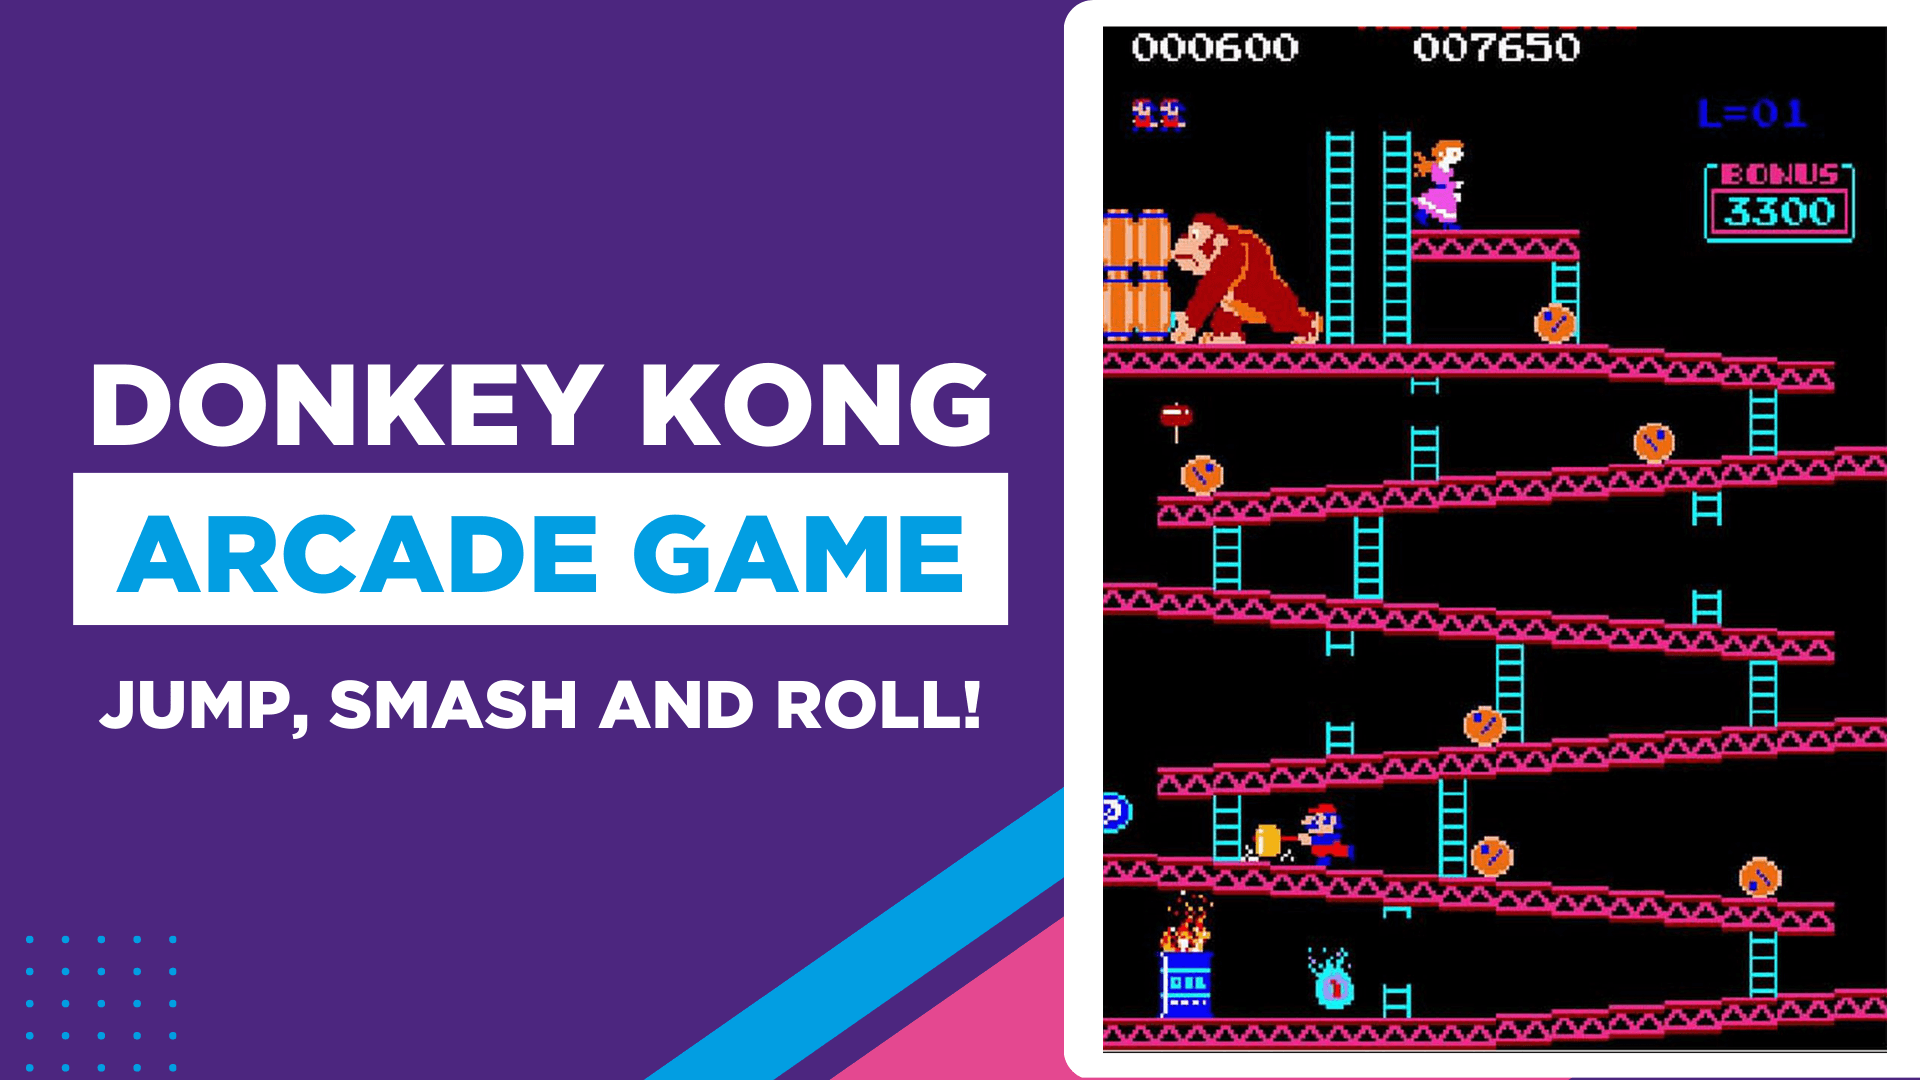 Donkey Kong arcade game — Jump, smash and roll! - Gamestate